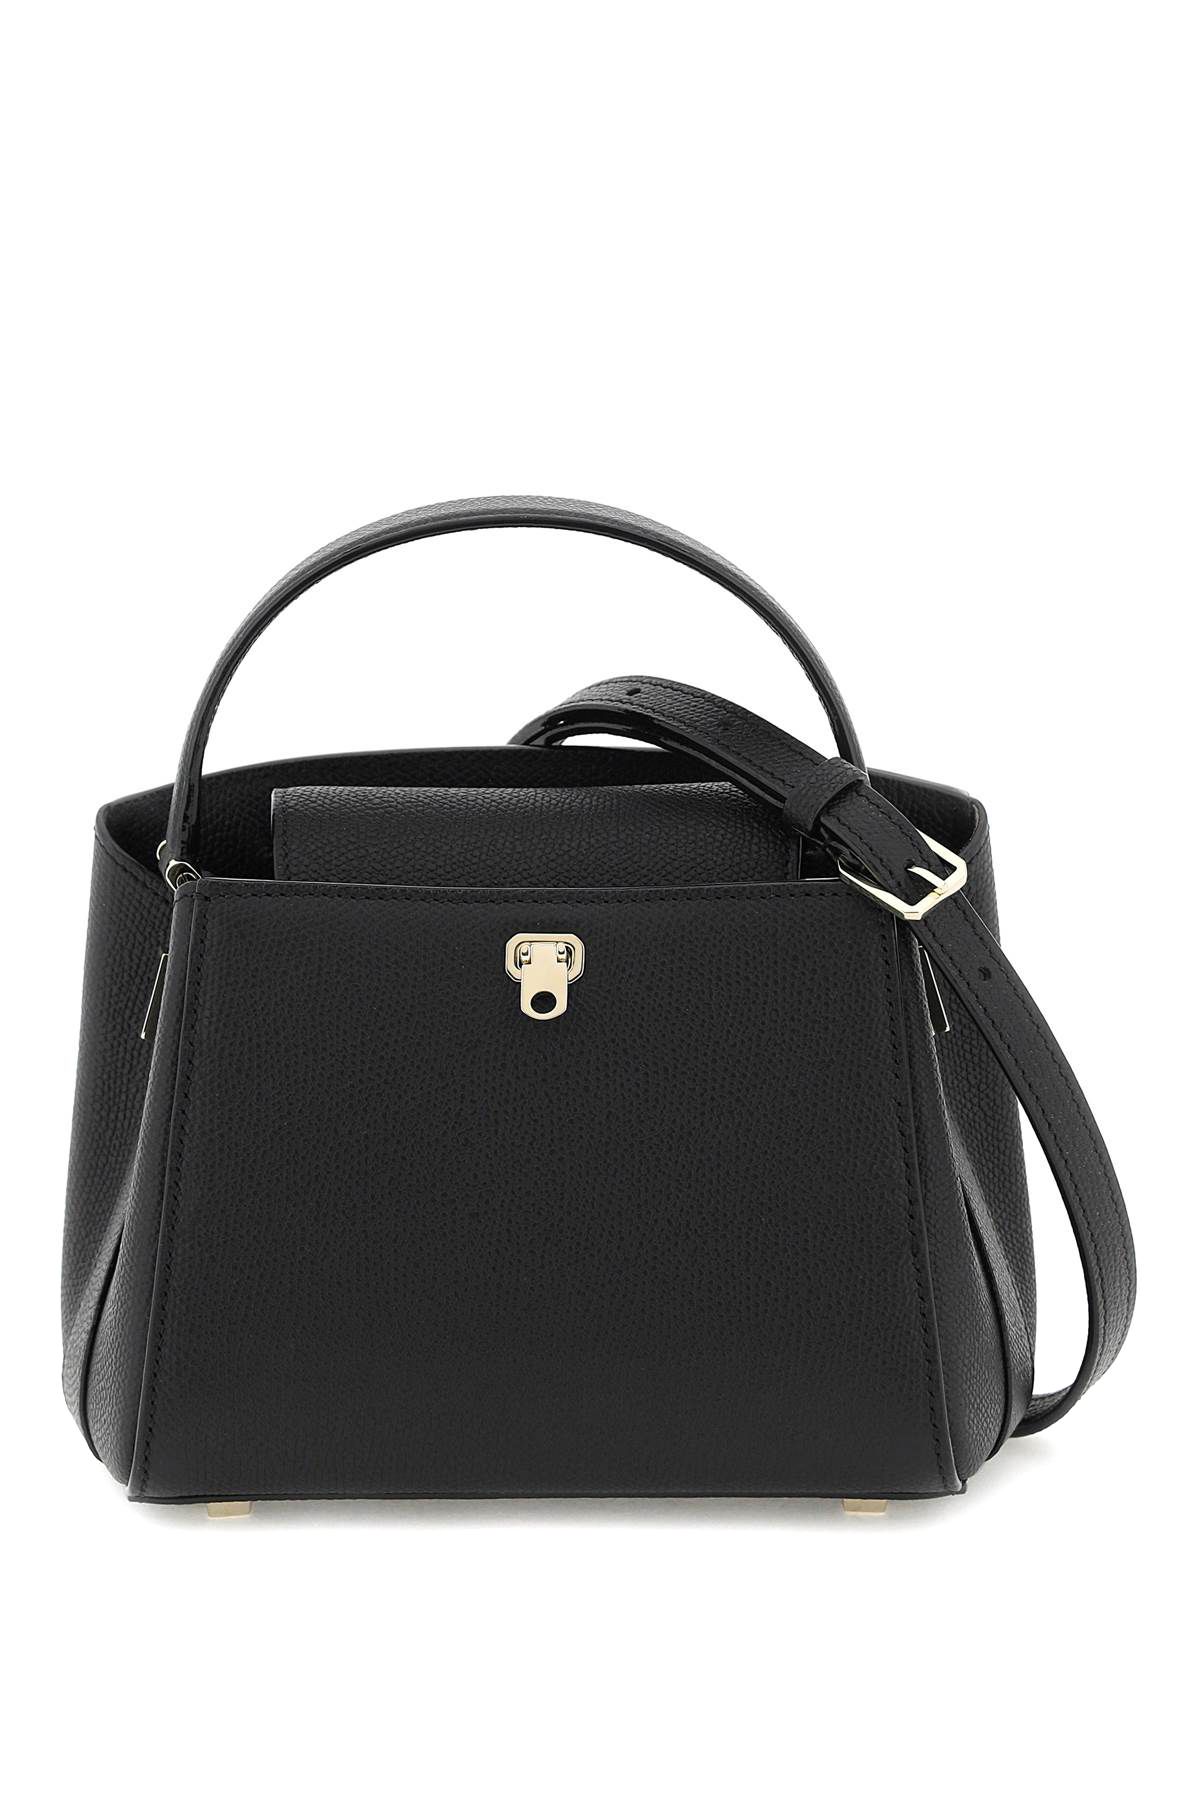 Valextra Brera Micro Leather Handbag In Black